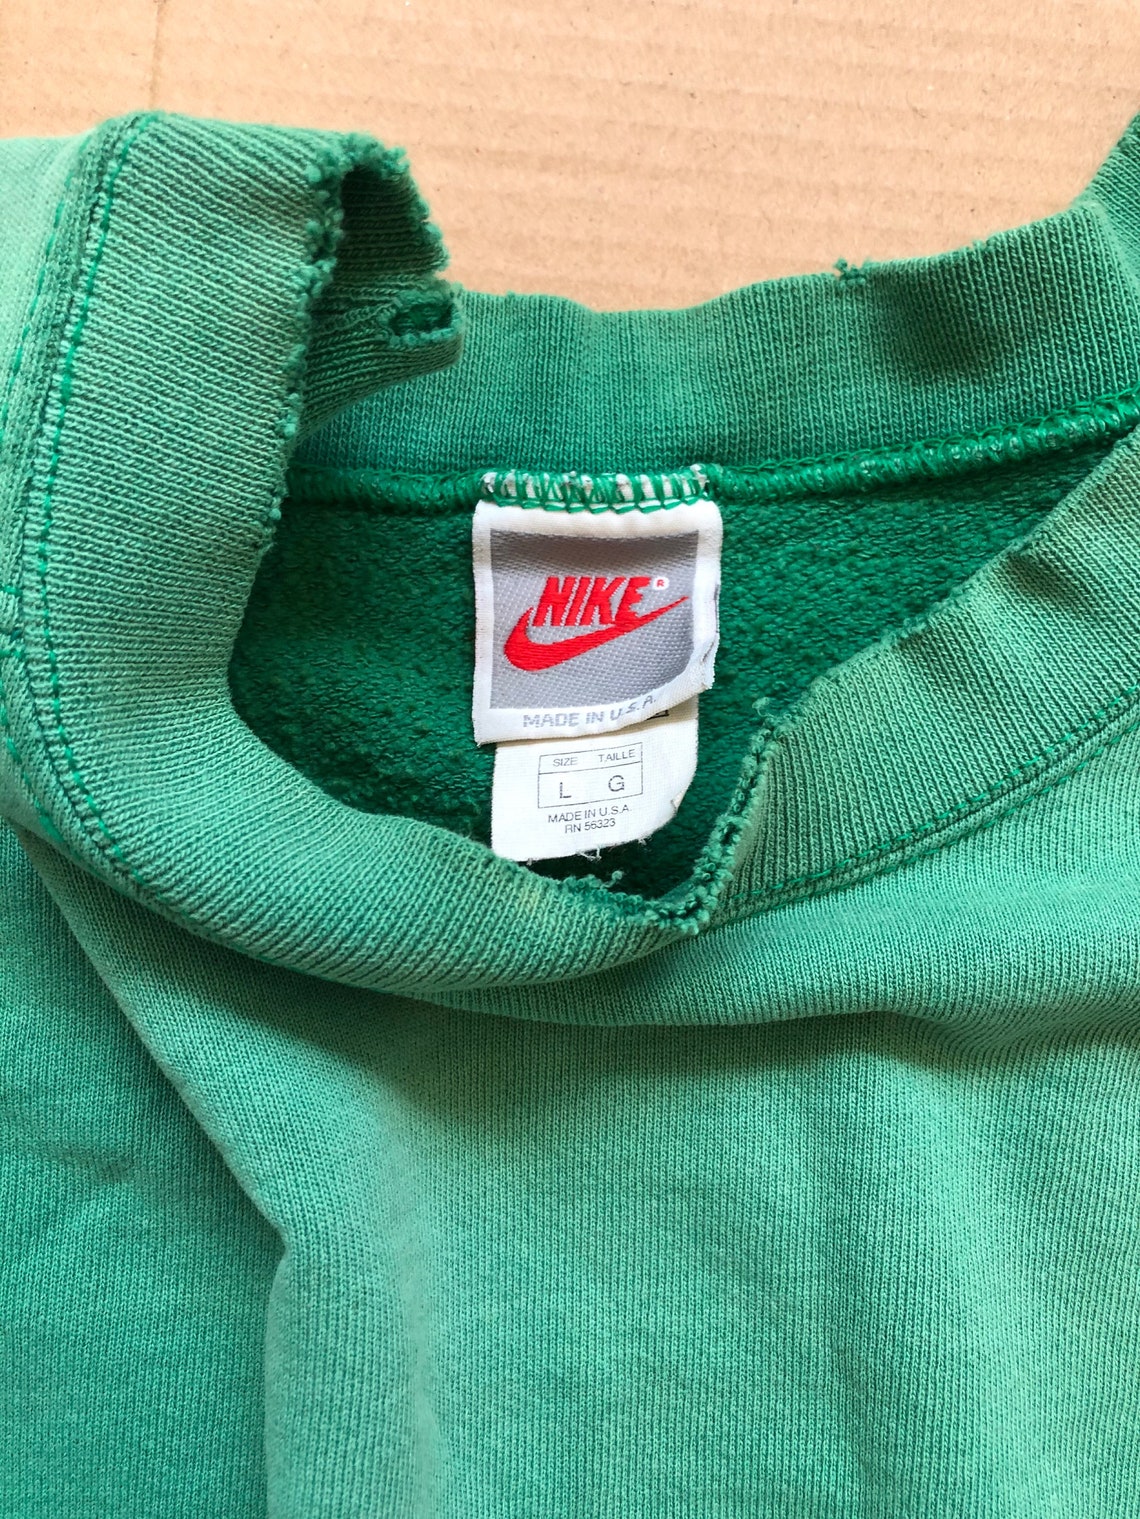 Vintage Nike Green Crewneck Sweater Size Large - Etsy